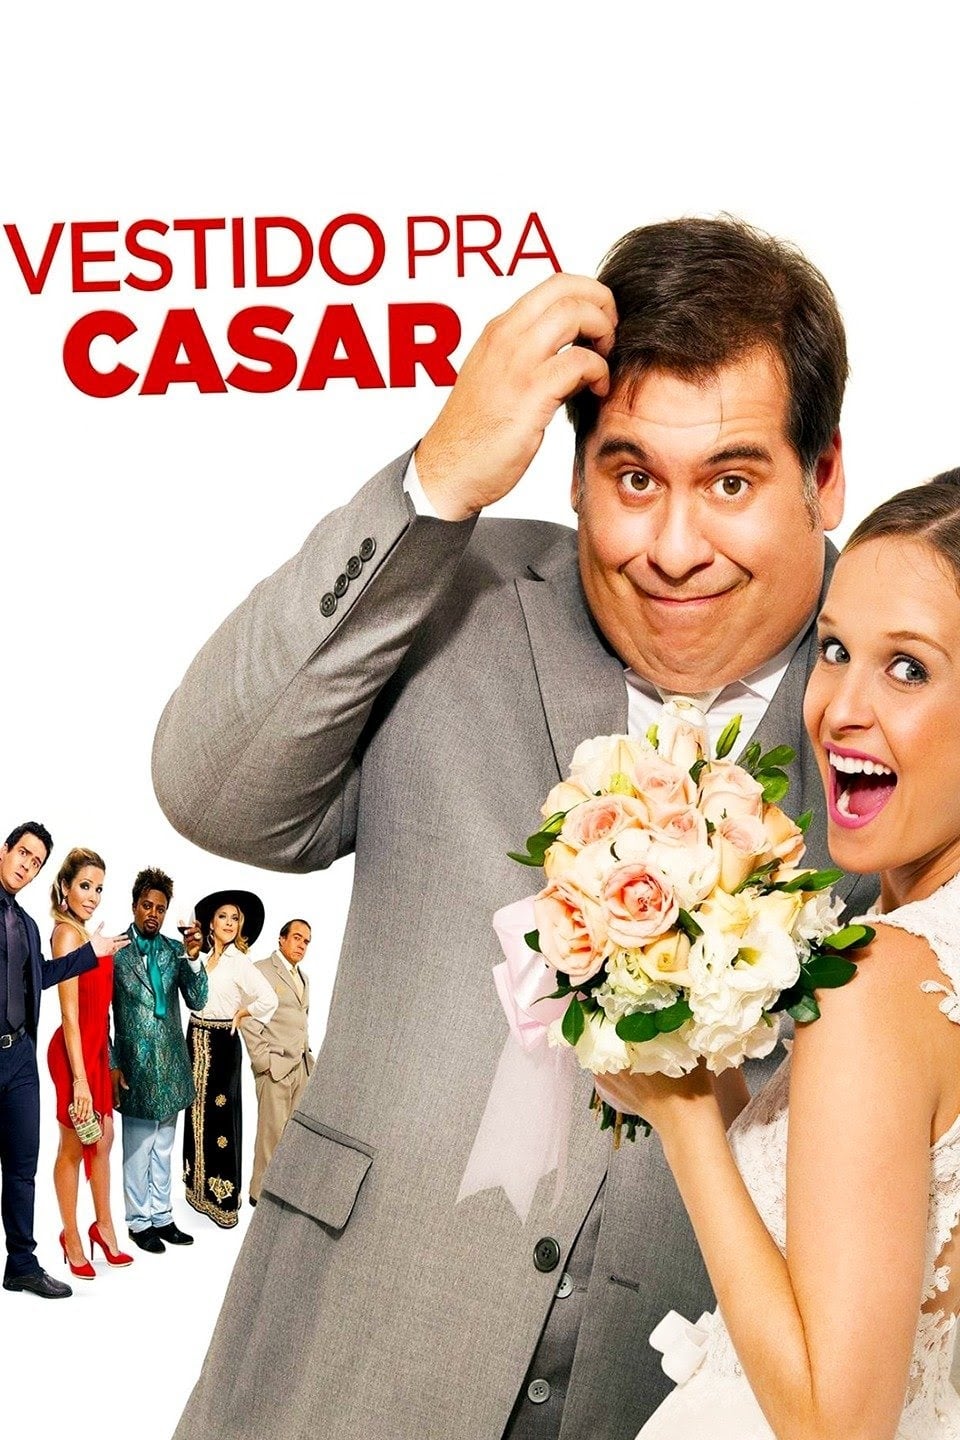 Vestido Pra Casar film